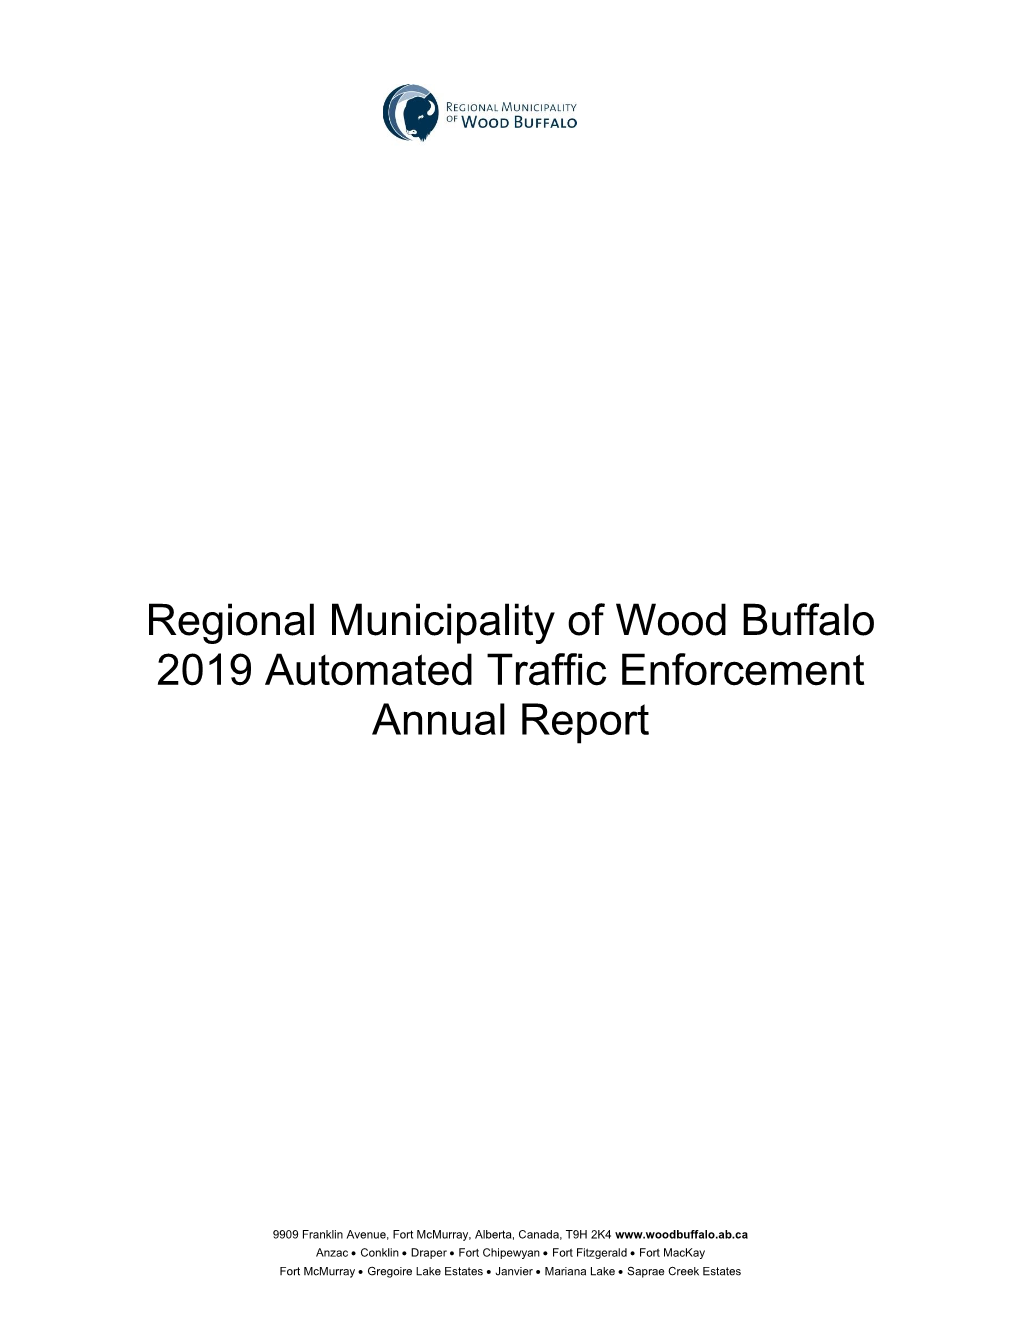 Regional Municipality of Wood Buffalo 2019 Automated Traffic Enforcement Annual Report